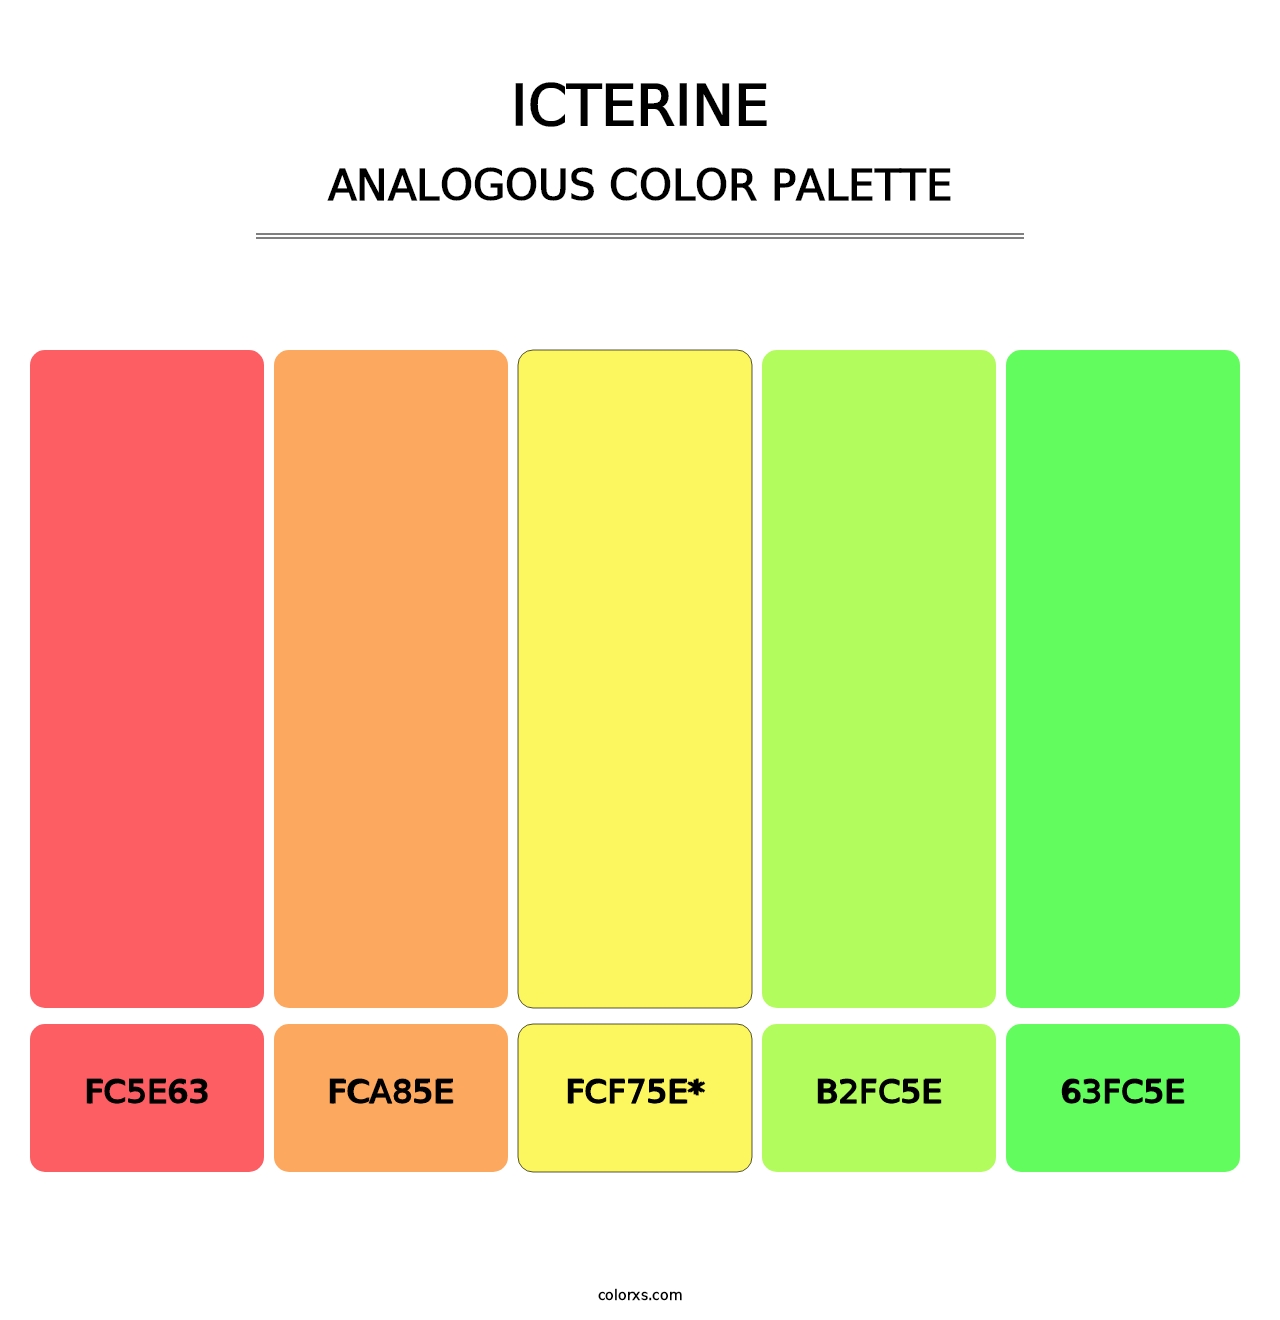 Icterine - Analogous Color Palette